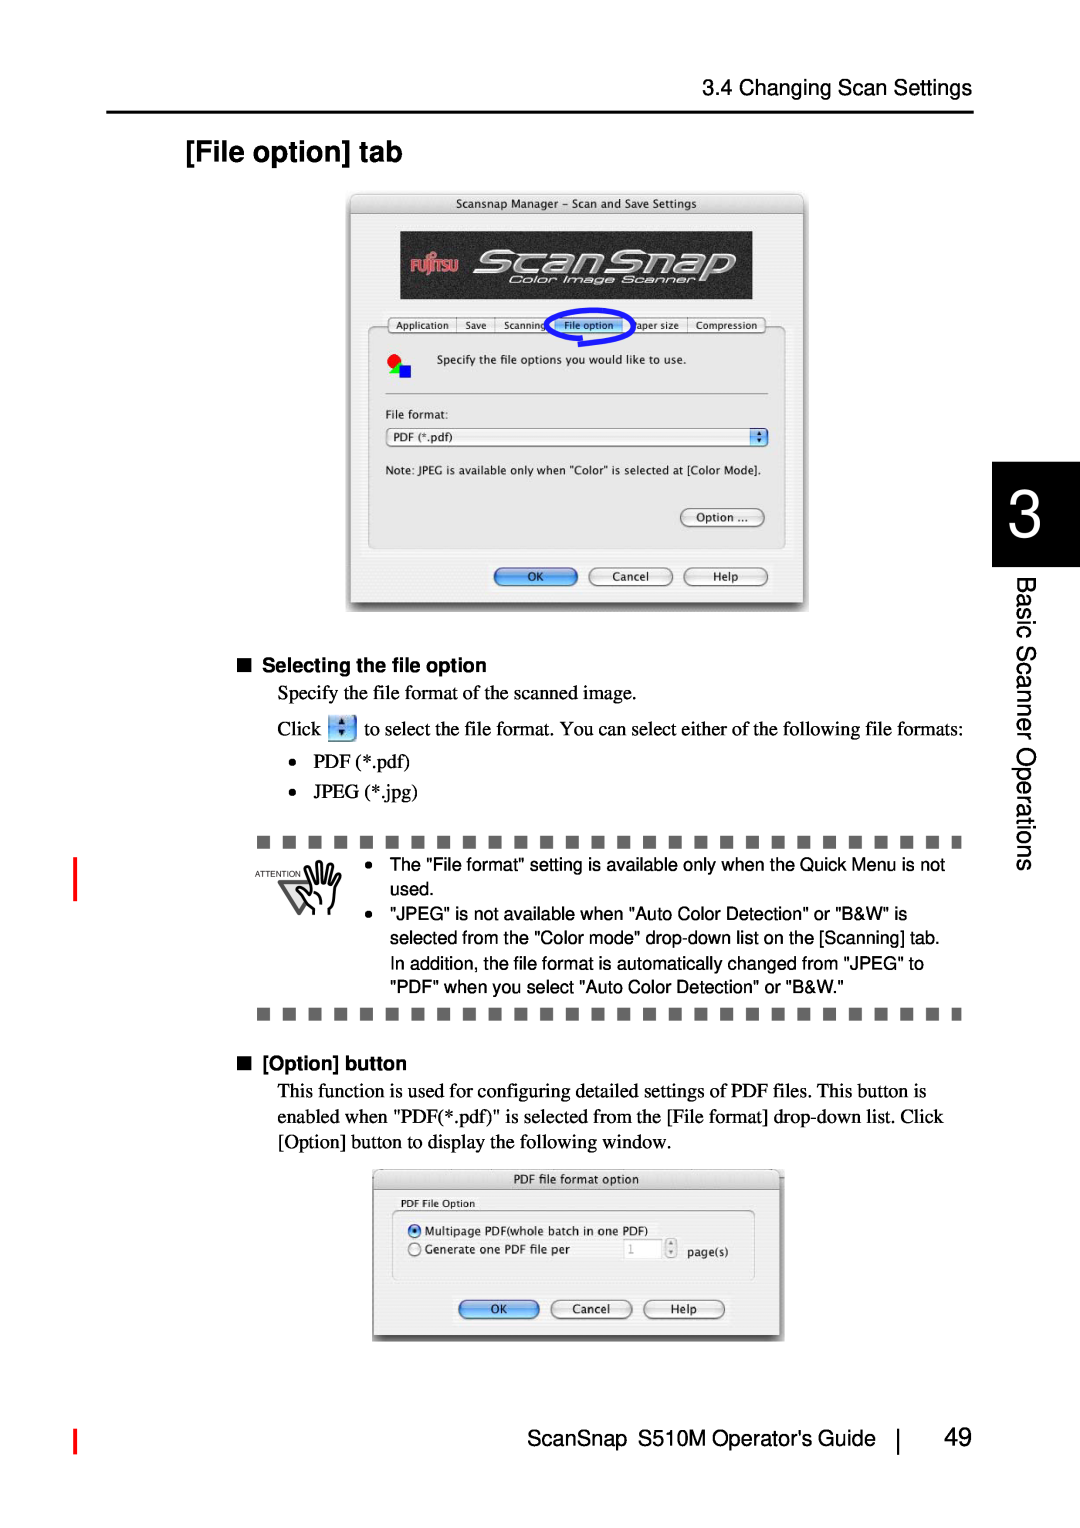 Fujitsu S510M manual File option tab, Basic Scanner Operations, Selecting the file option, Option button 